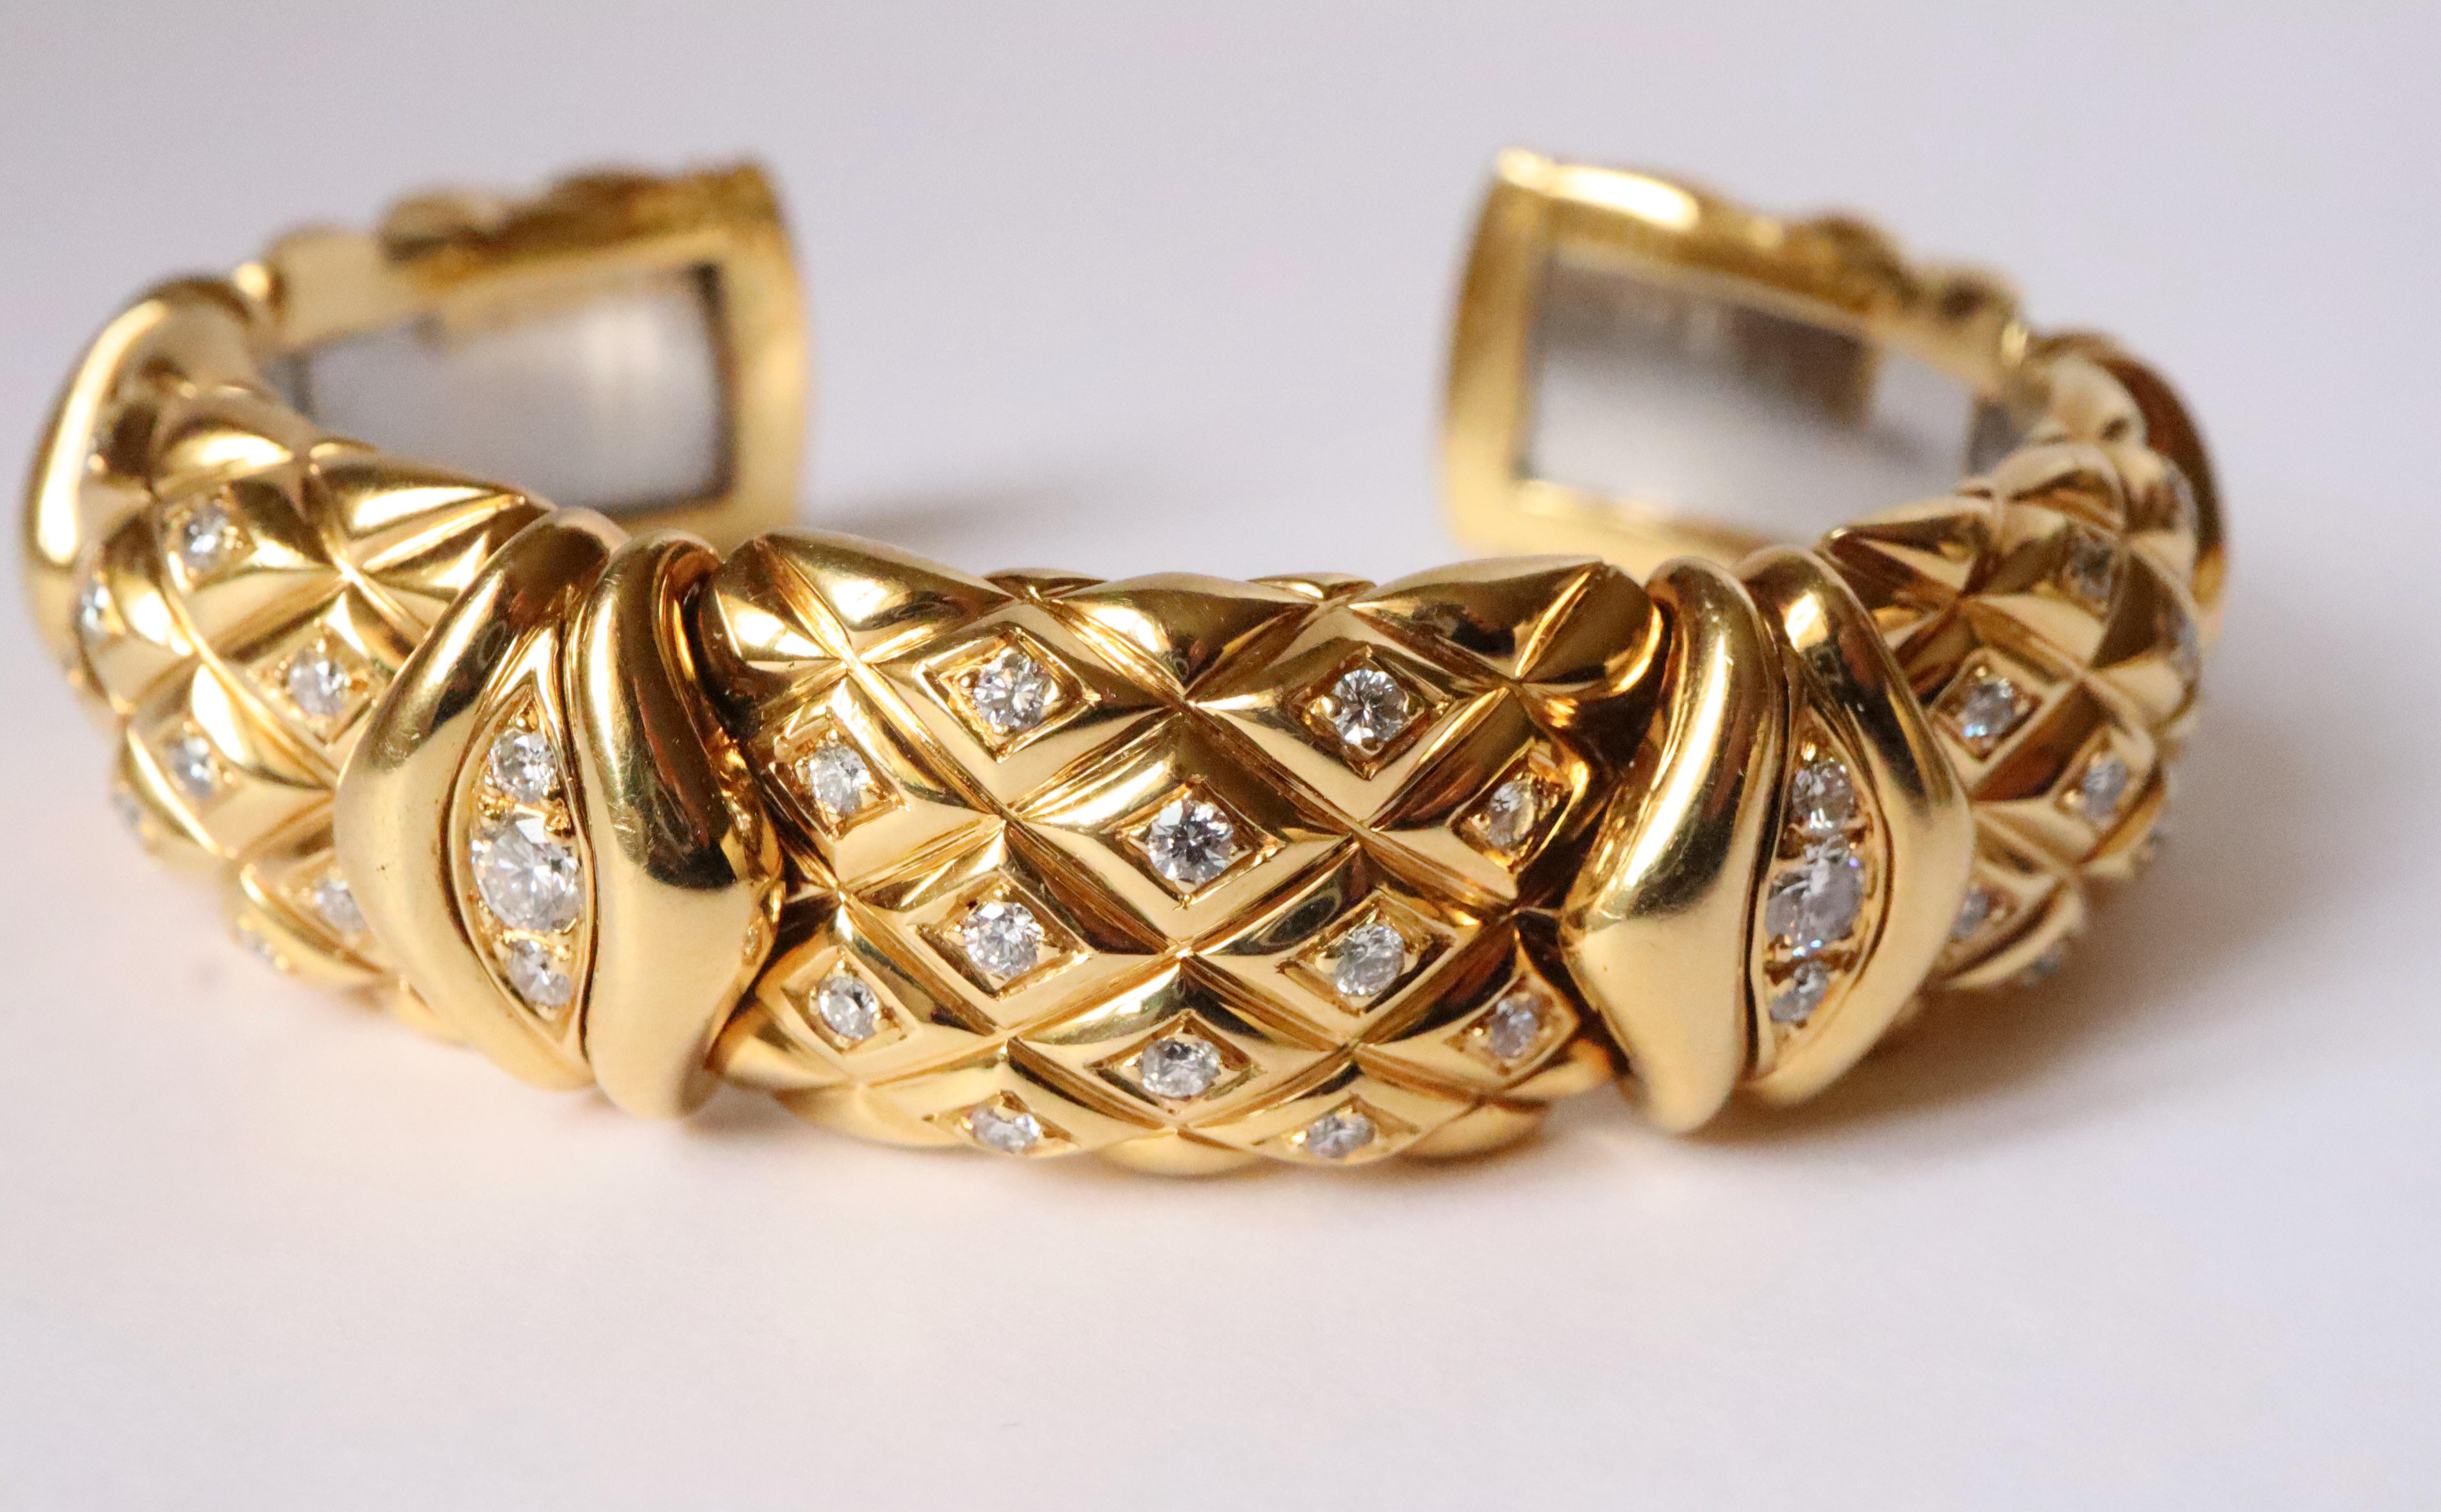 Mauboussin Semi-Rigid Bracelet in 18 Kt Yellow Gold and Diamonds For Sale 1